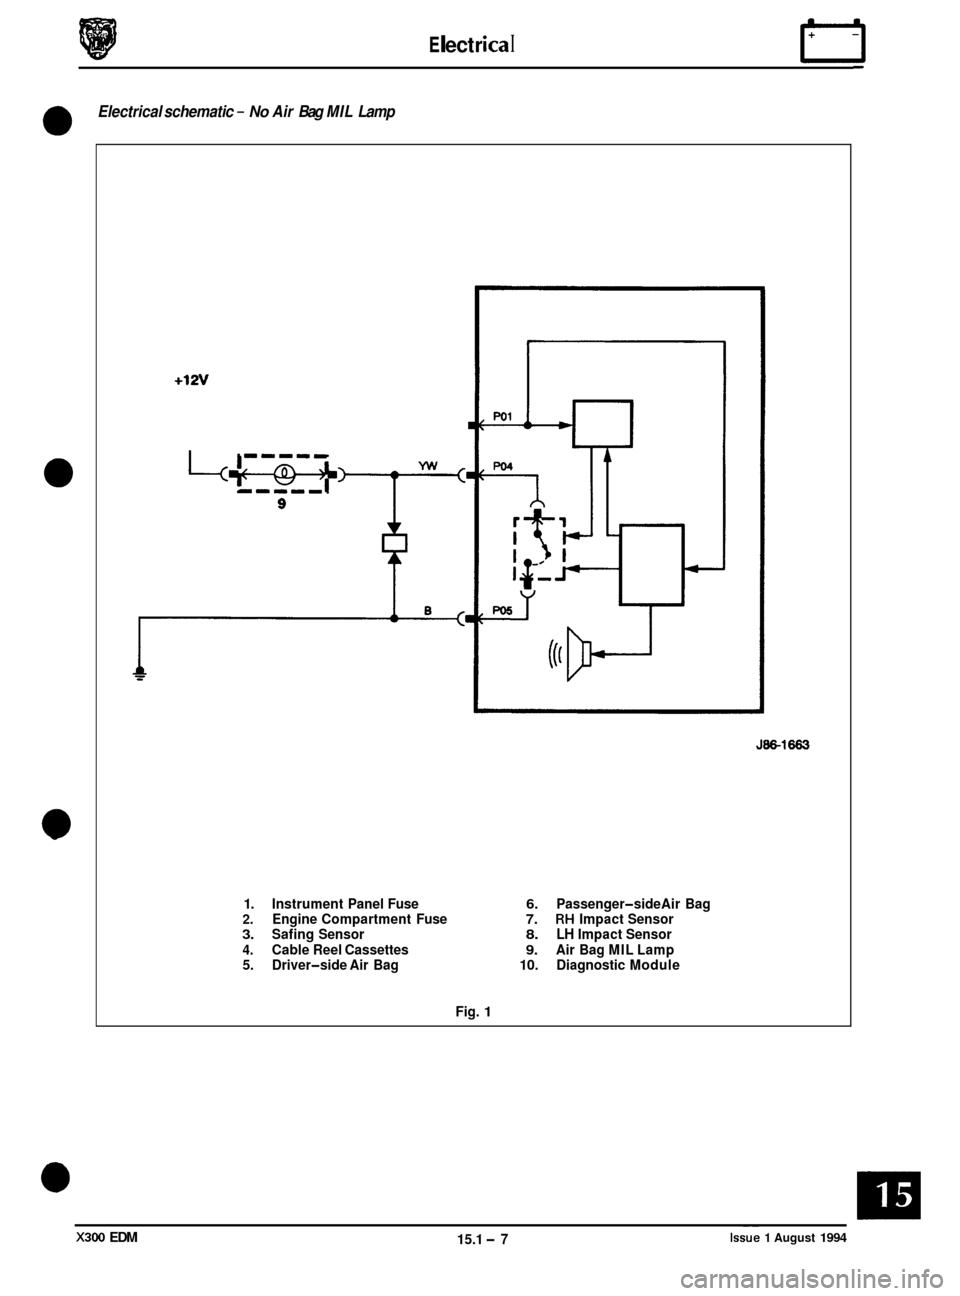 JAGUAR XJ6 1994 2.G Electrical Diagnostic Manual E I ect r ica I rl 
Electrical schematic - No Air Bag  MIL  Lamp 
0 
+12v 
1. Instrument  Panel Fuse 2. Engine  Compartment  Fuse 3. Safing Sensor 
4. Cable Reel  Cassettes 
5.  Driver-side Air  Bag 
